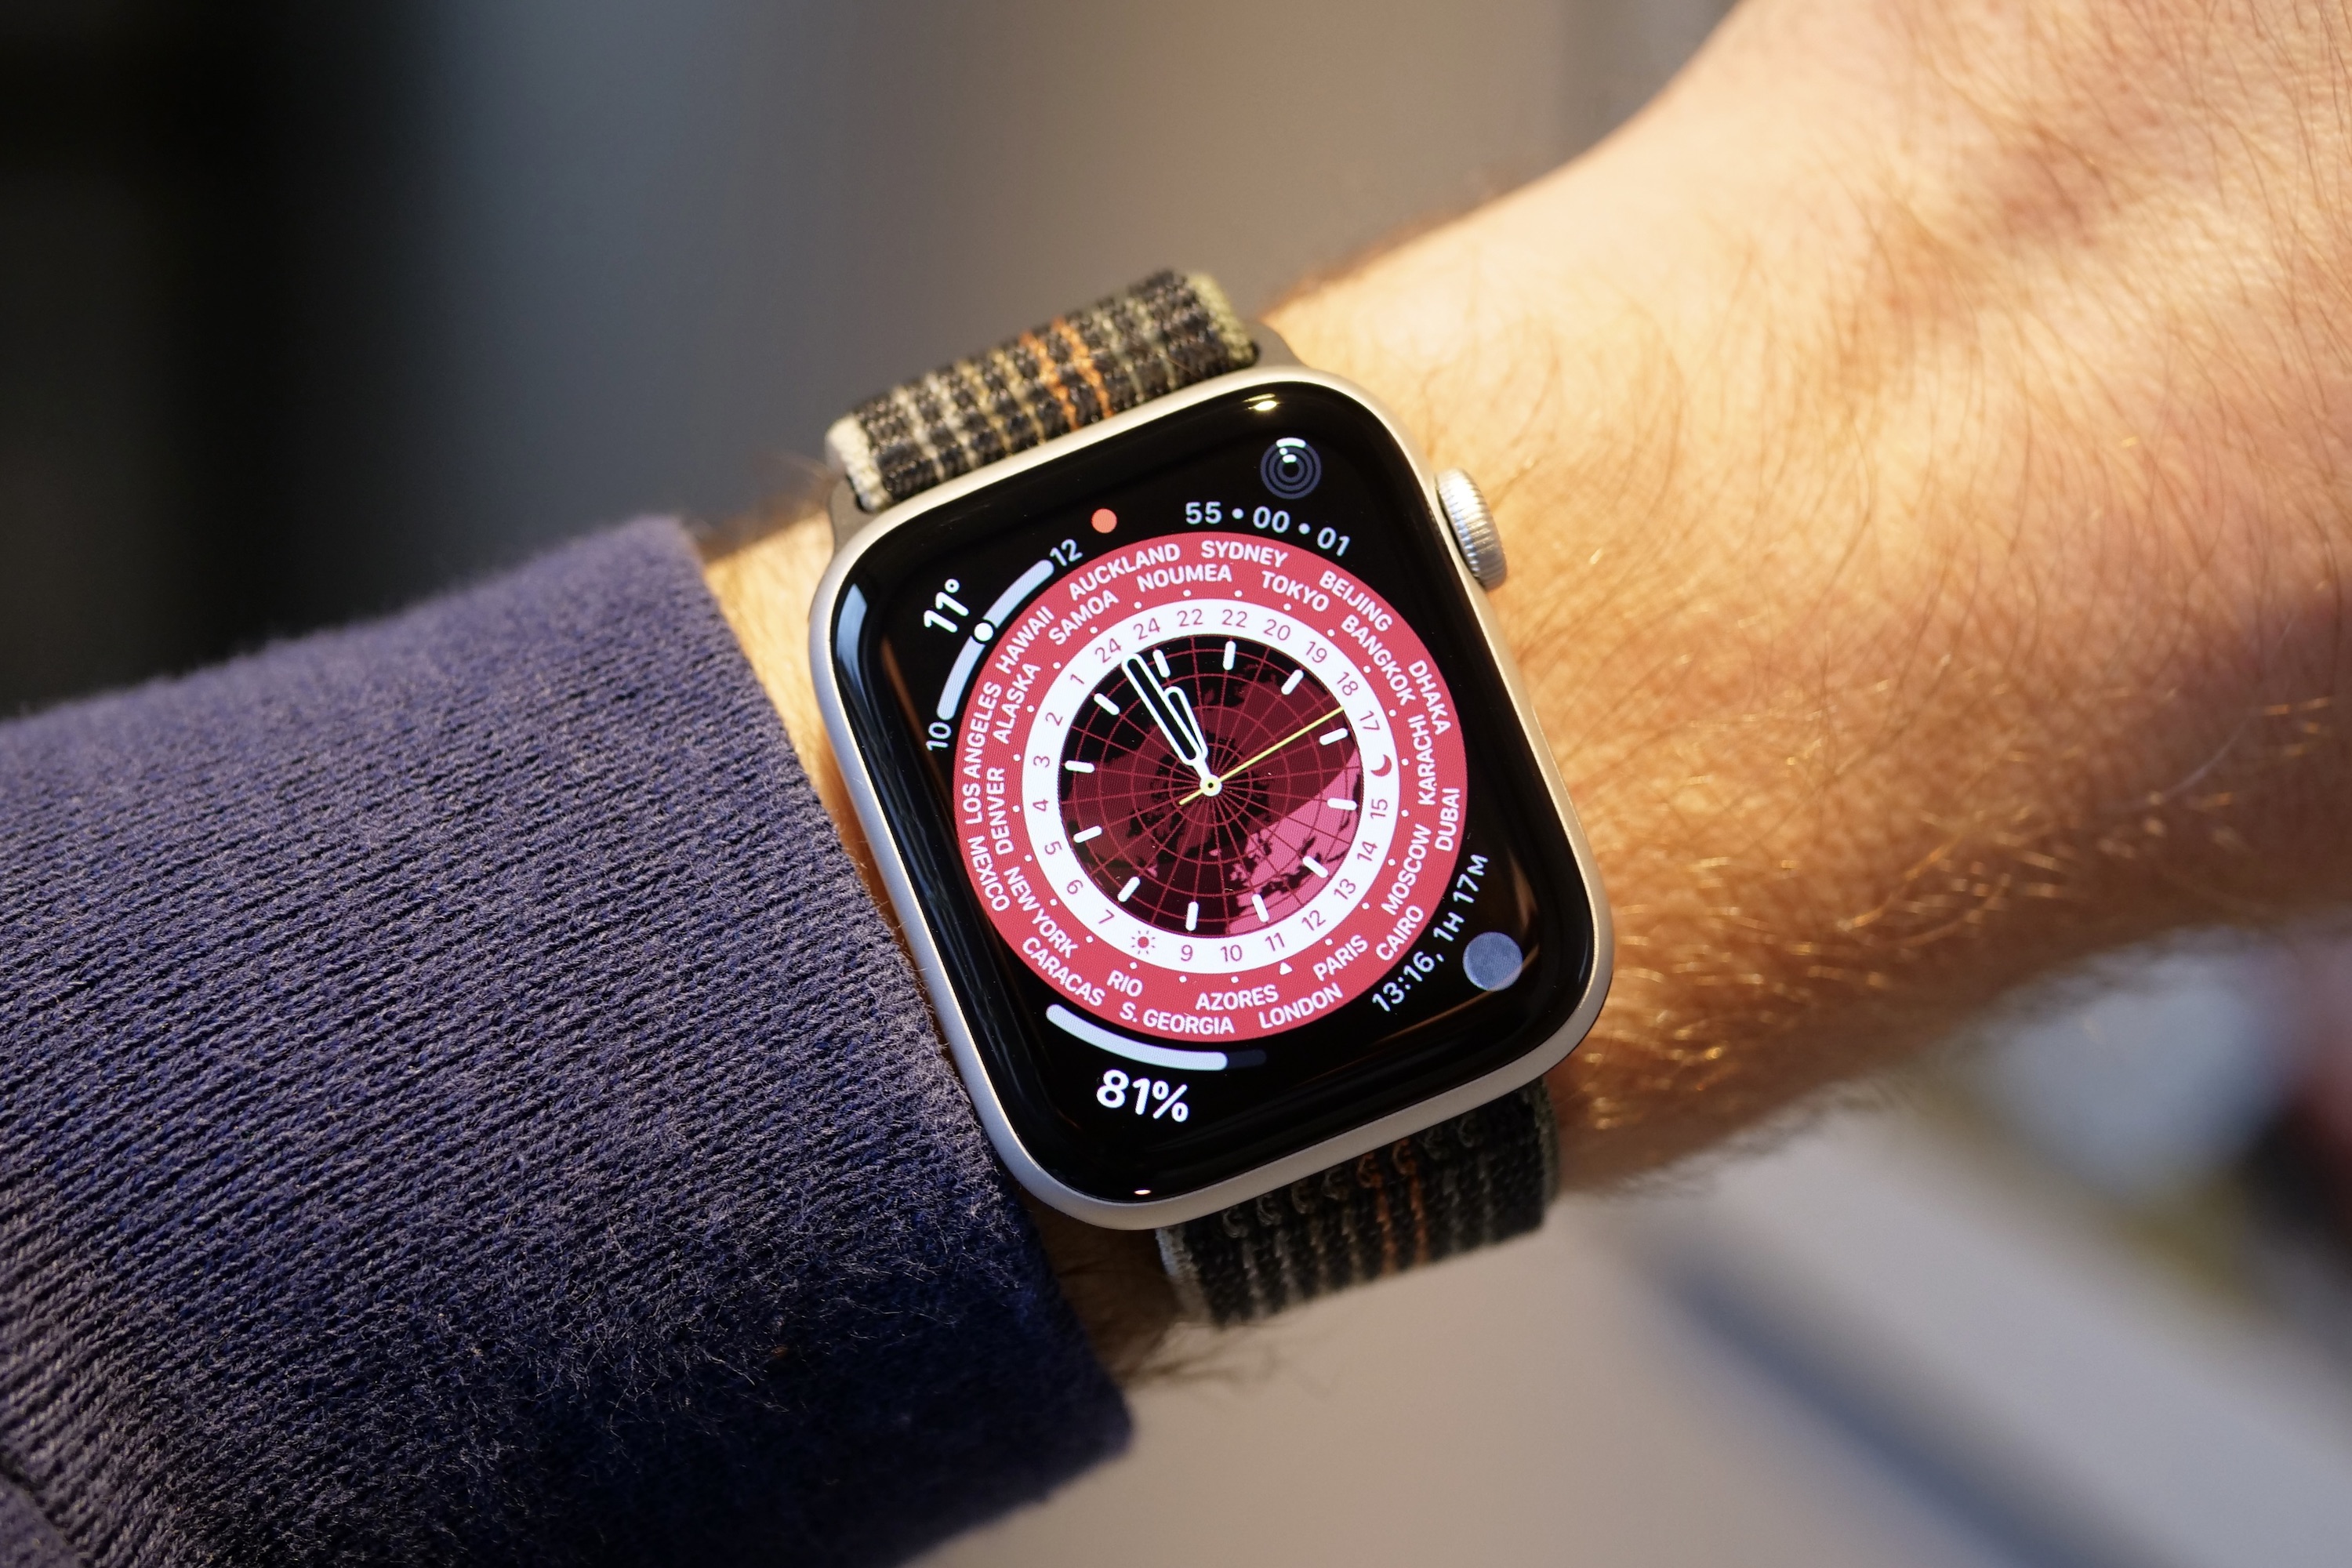 Mostrador da hora mundial exibido no Apple Watch SE 2.